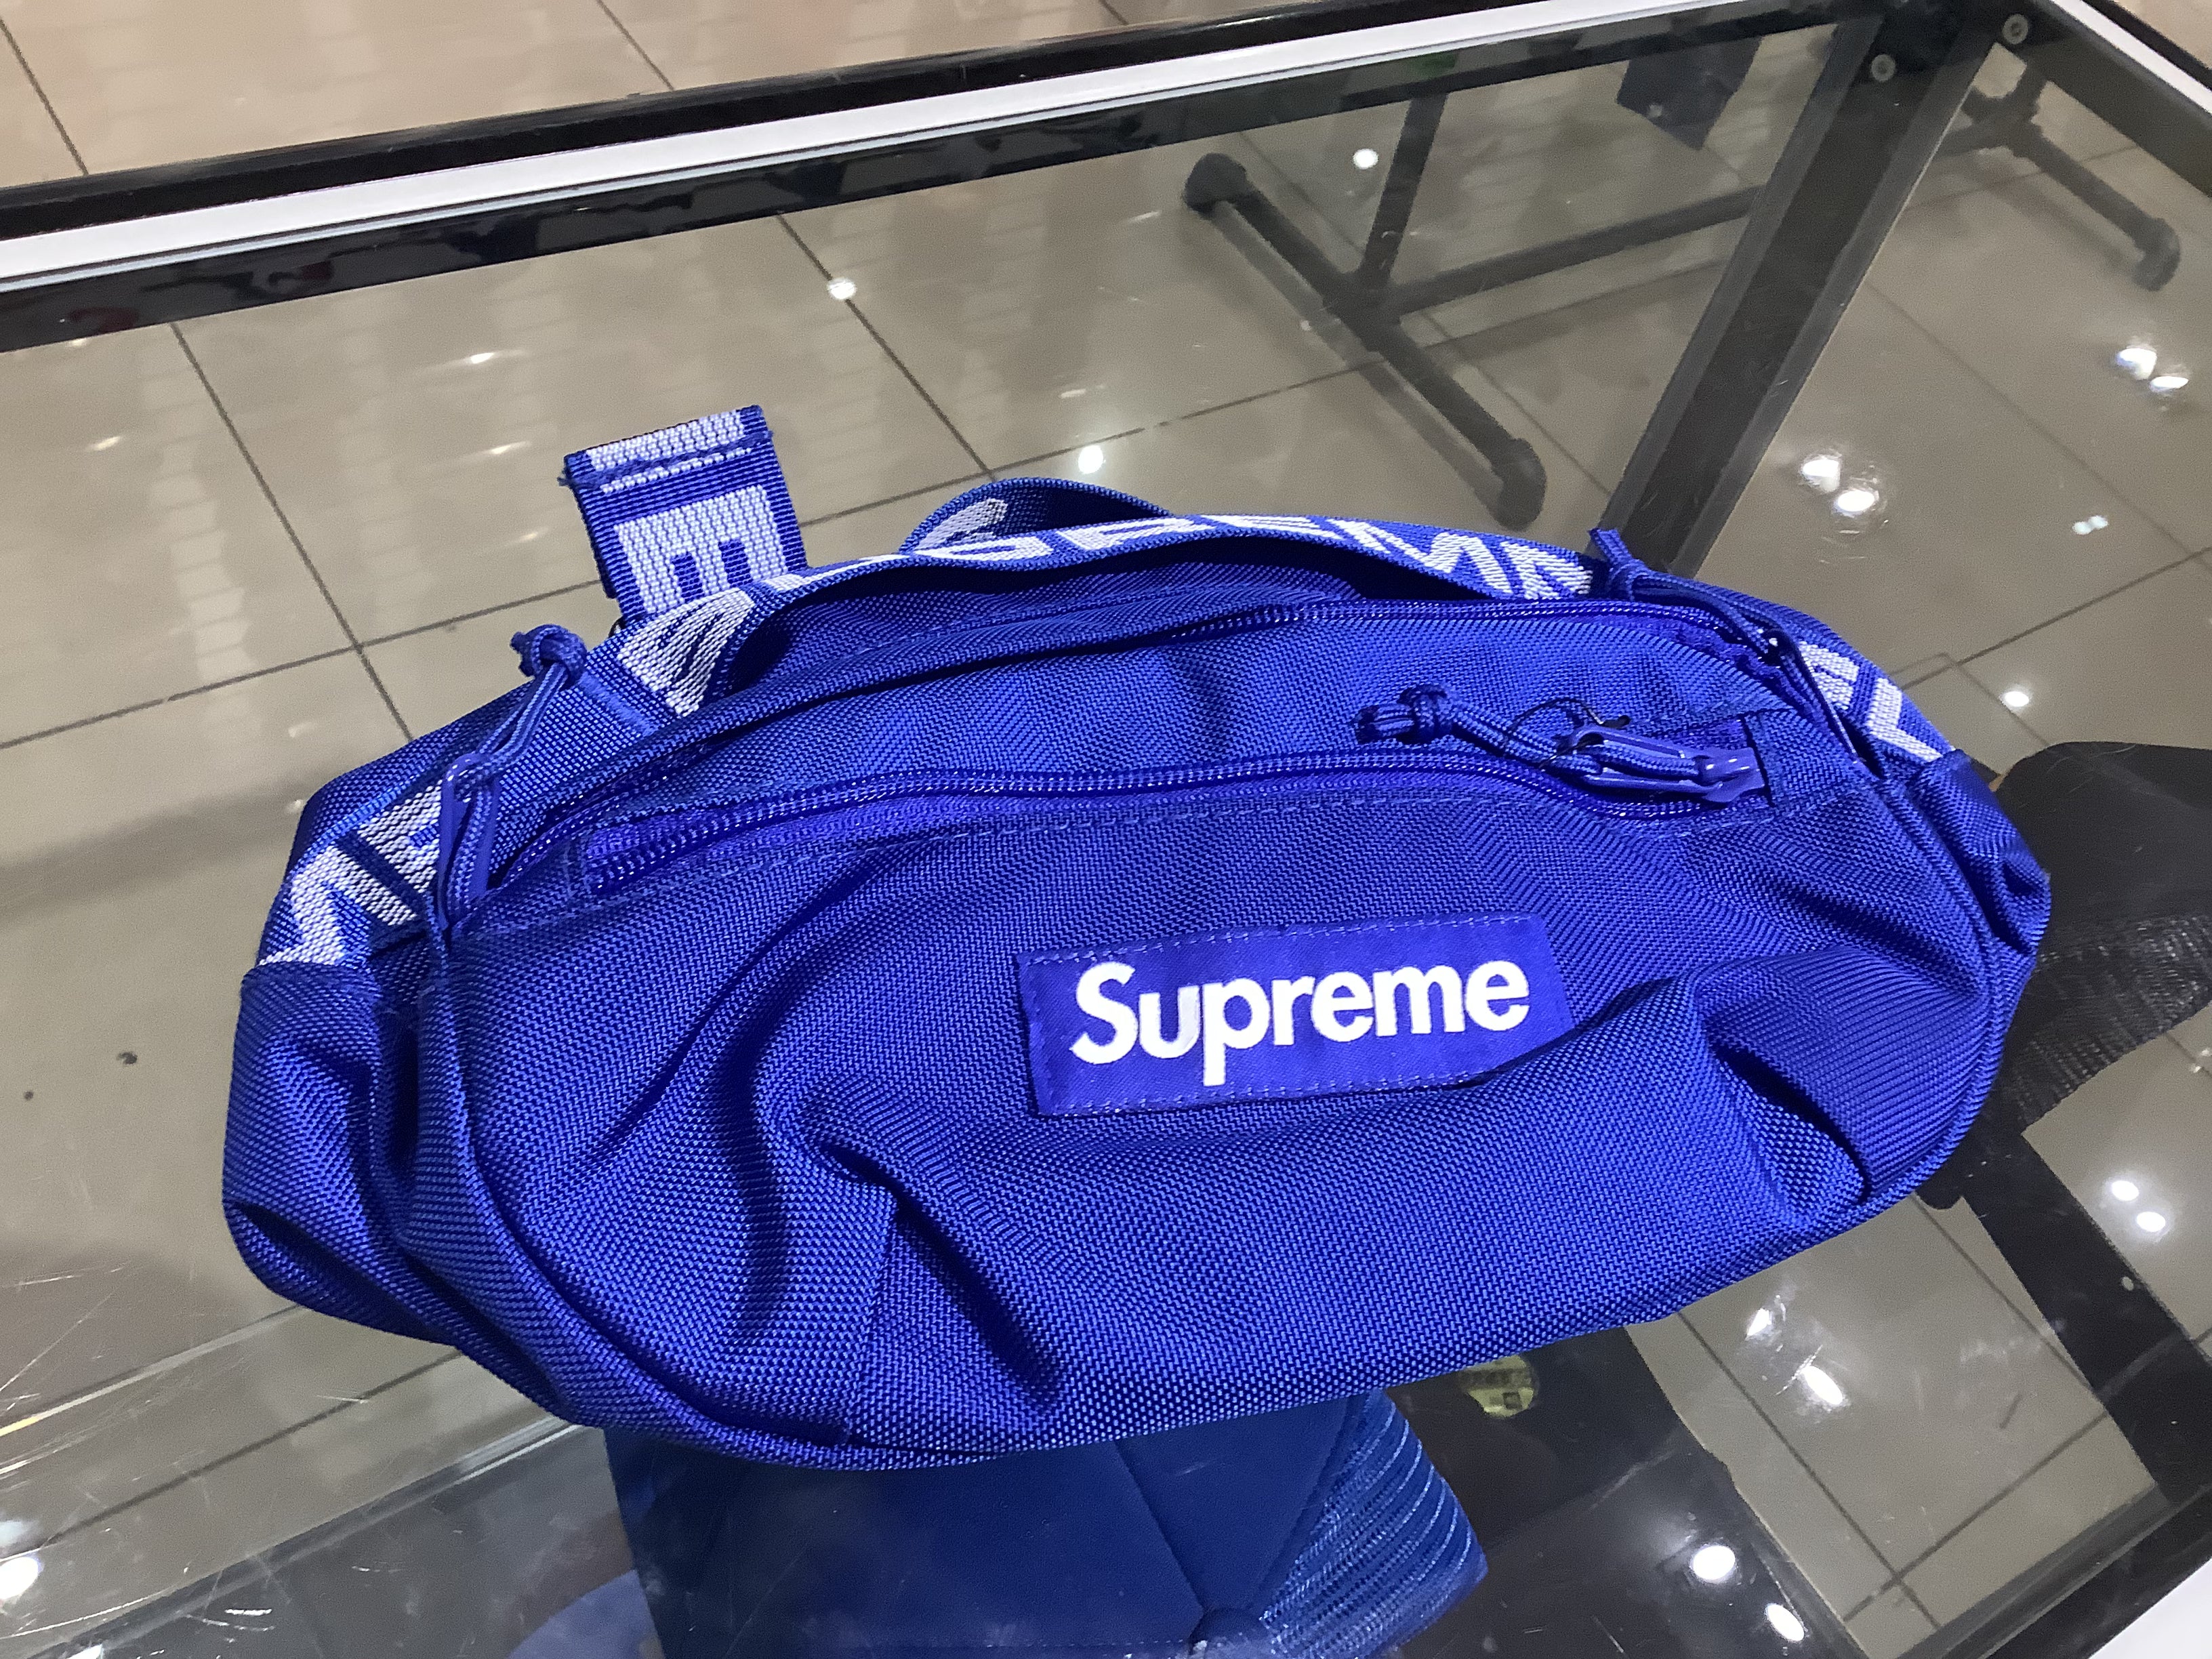 Waist Bag Supreme SS18 Fanny Pack Brand - BLUE